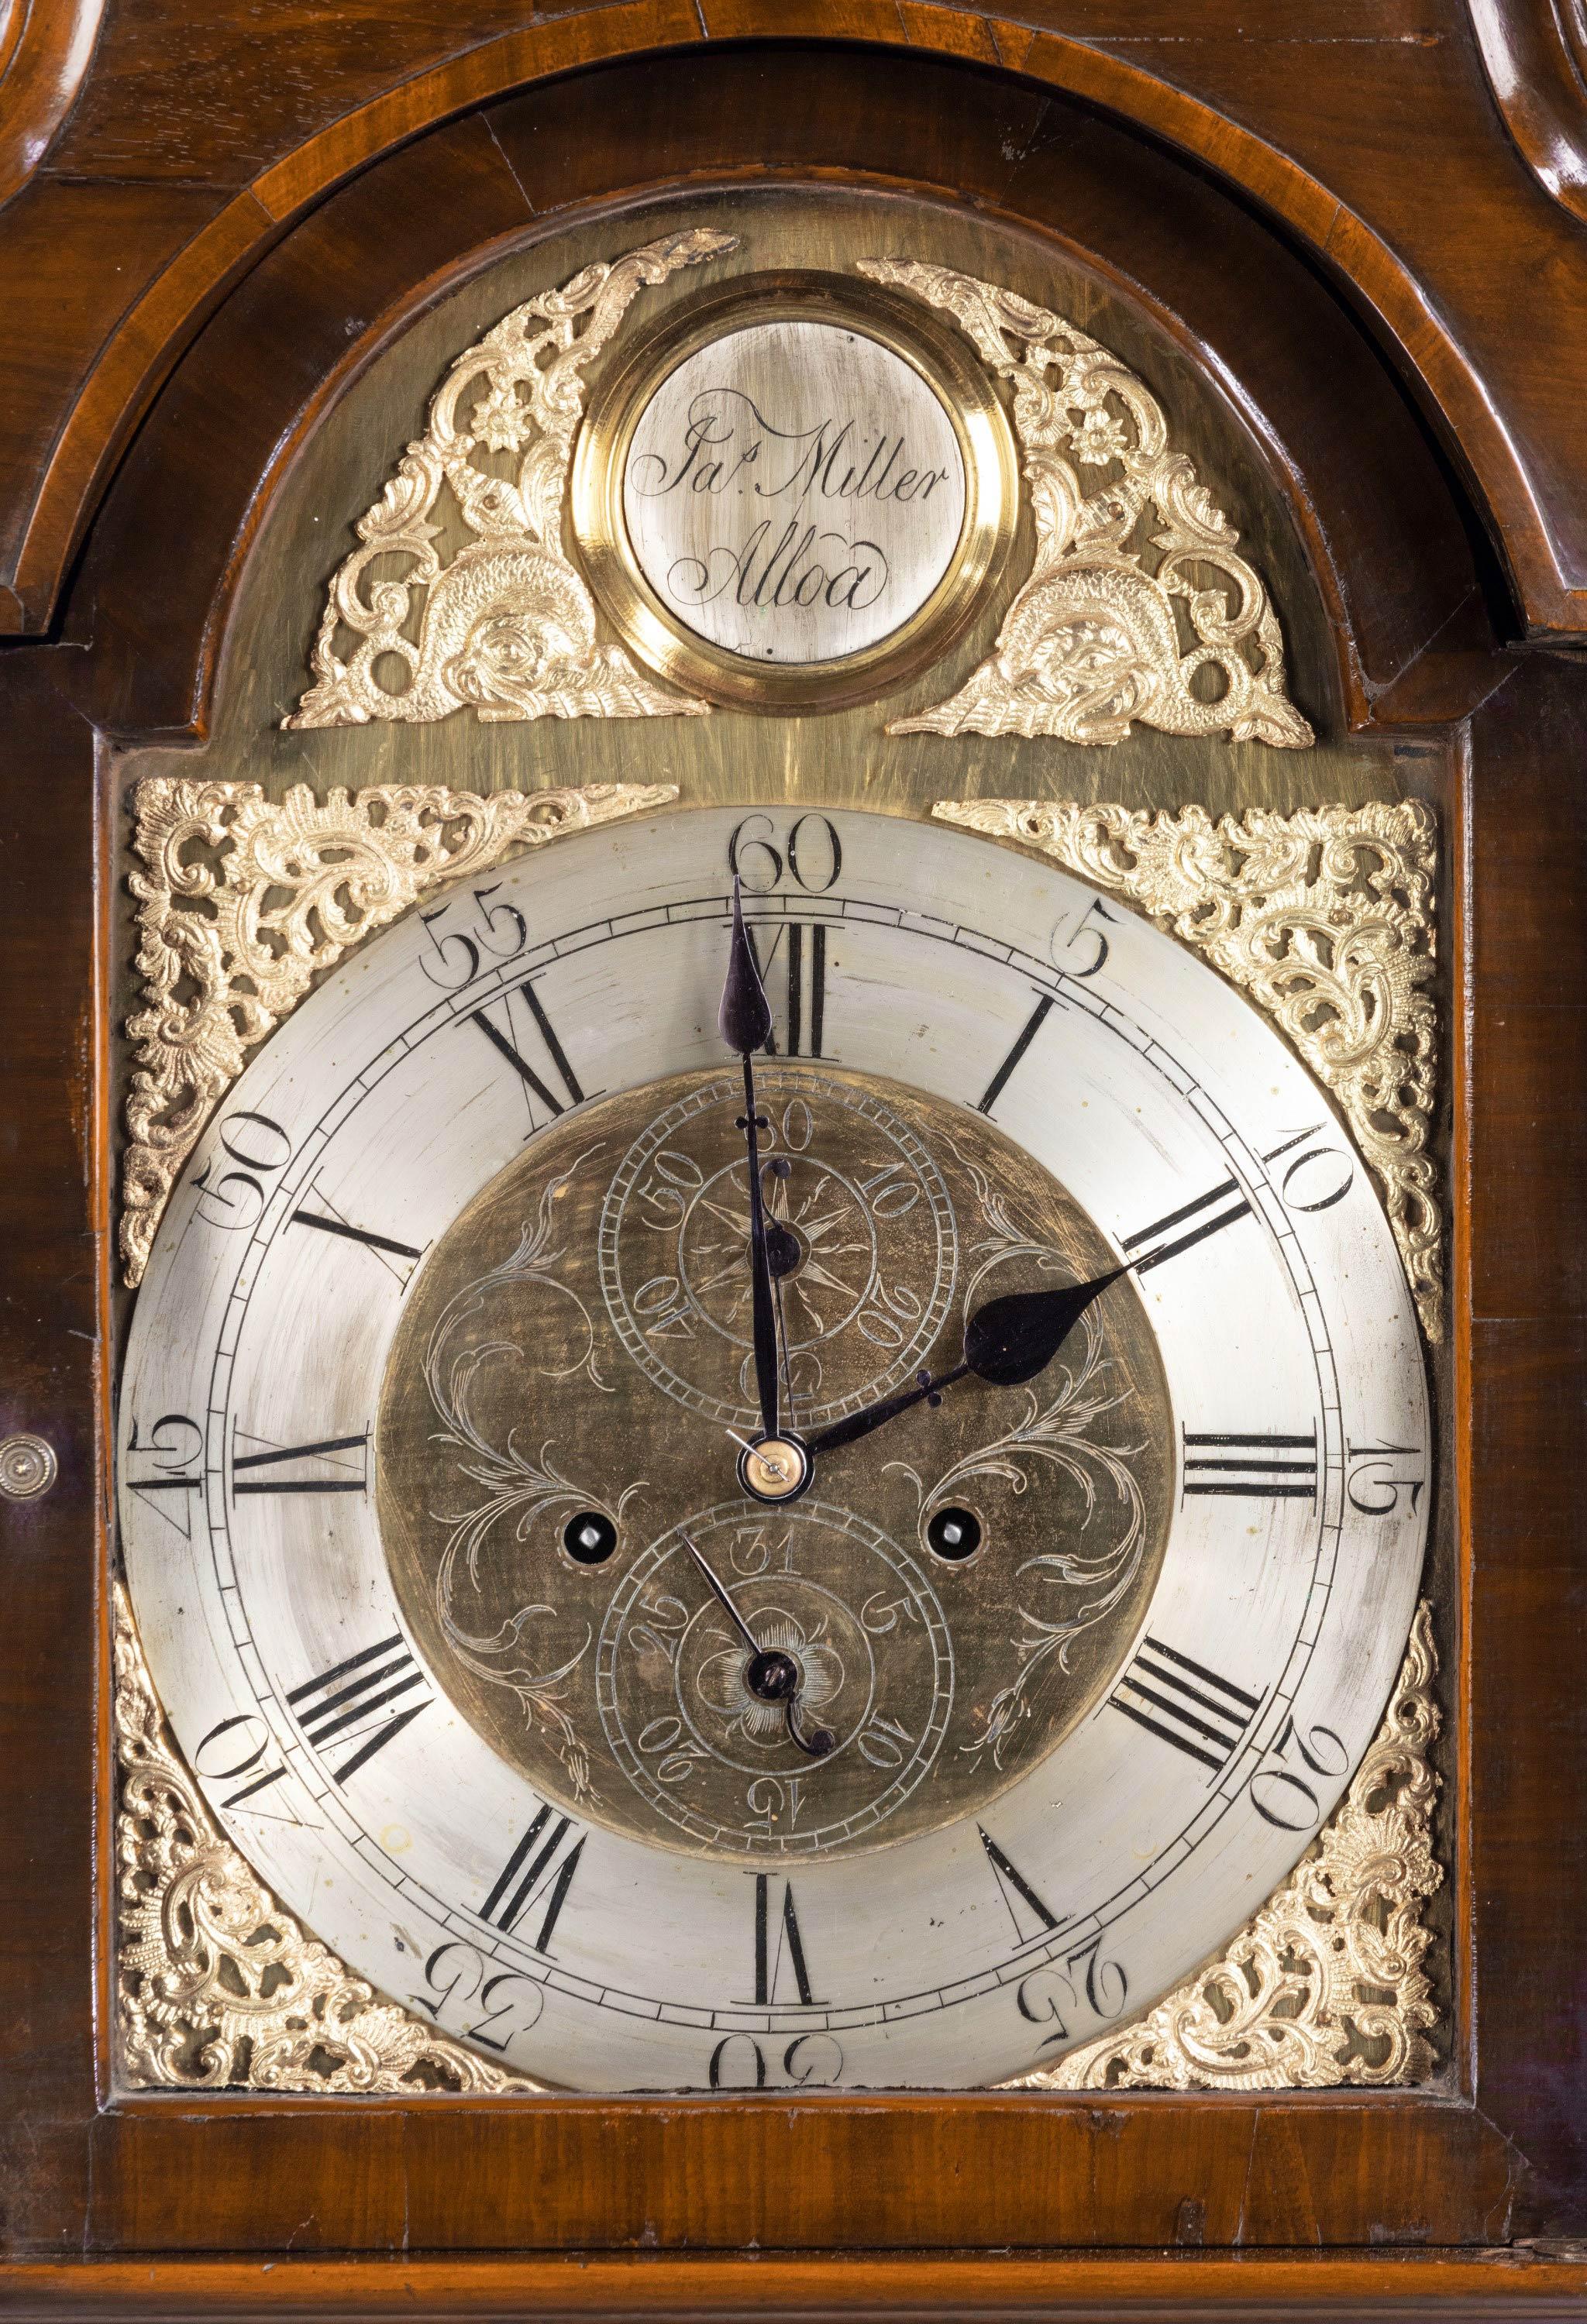 Scottish 19th Century Eight Day Longcase Clock by Jas Miller, Alloa